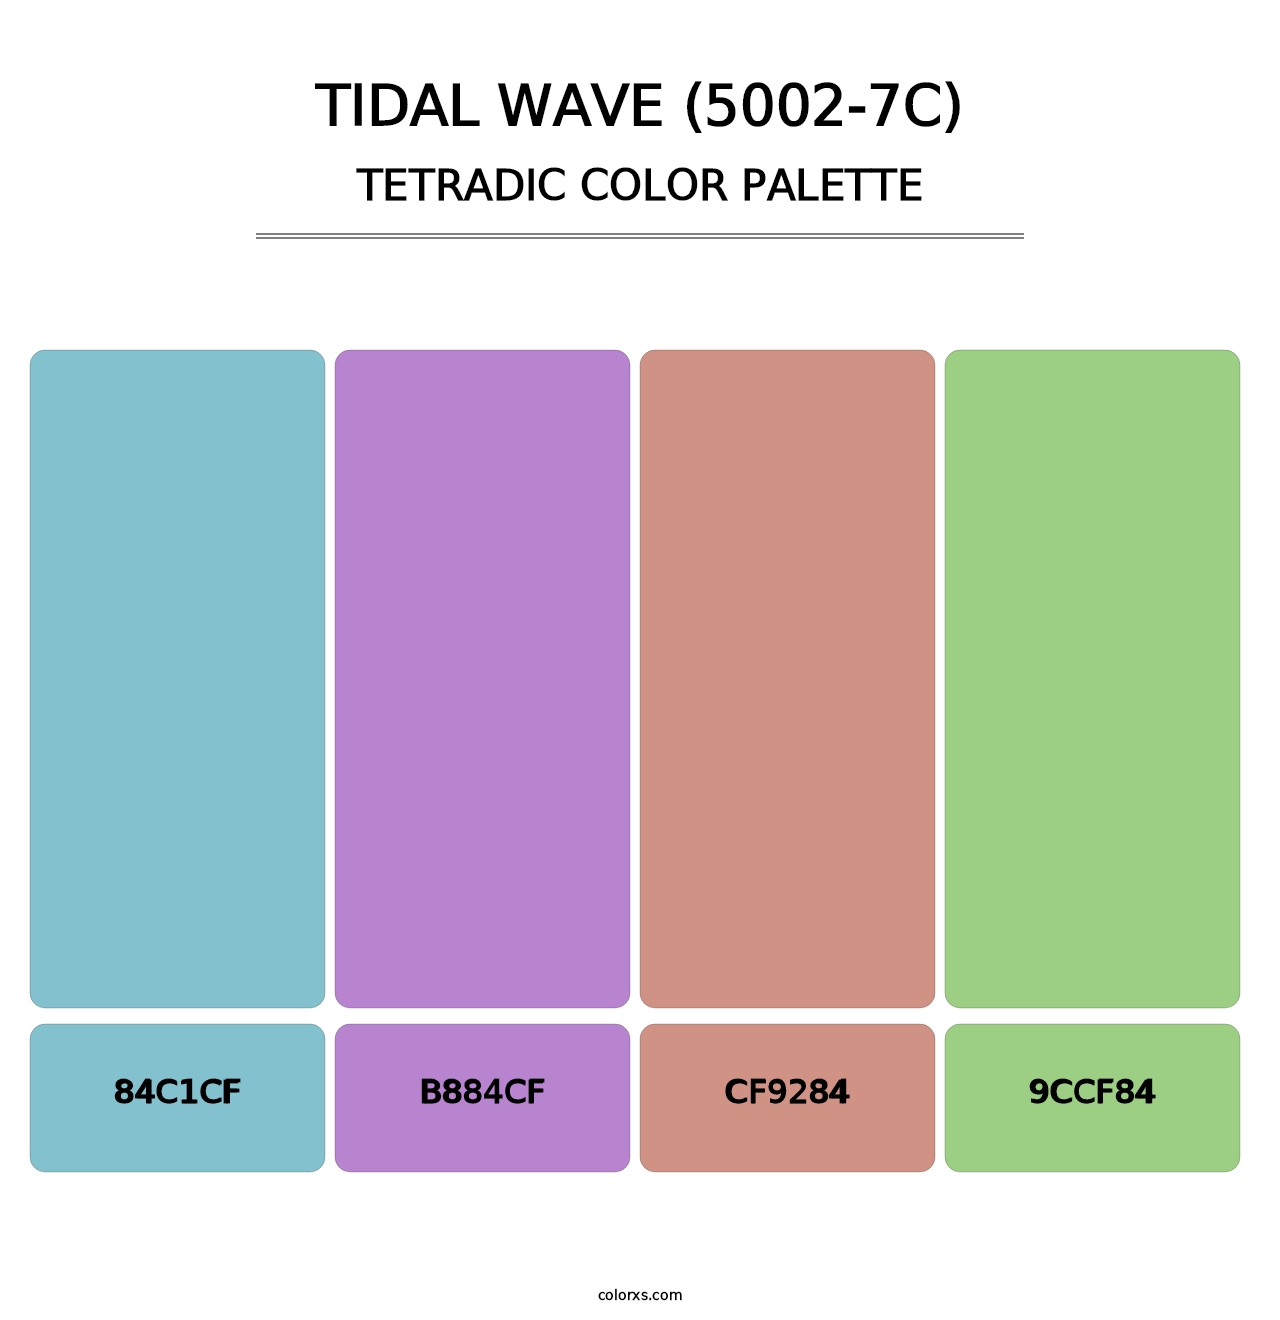 Tidal Wave (5002-7C) - Tetradic Color Palette